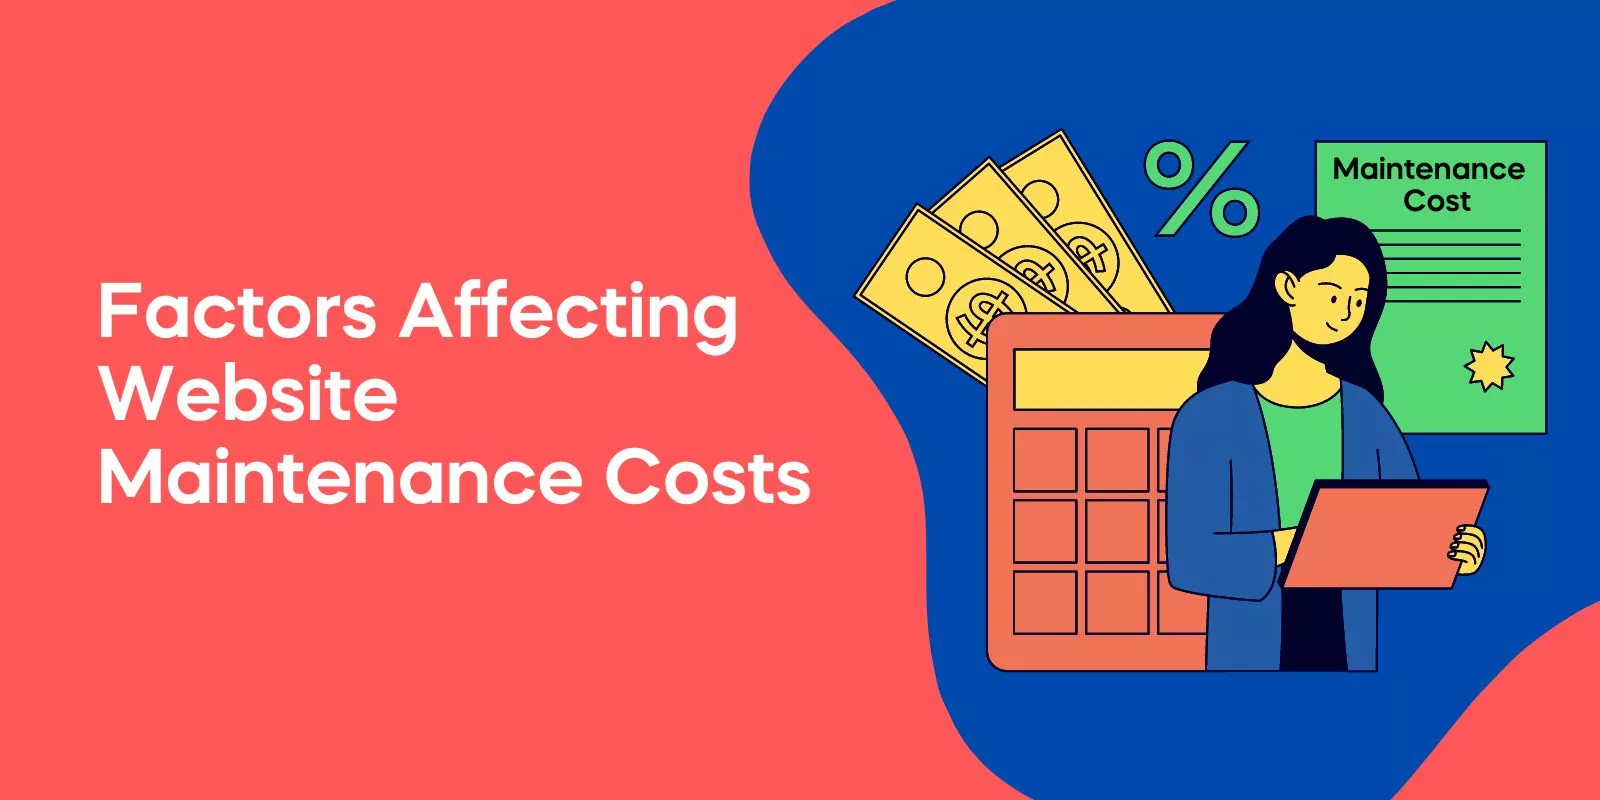 Factors Affecting Website Maintenance Costs